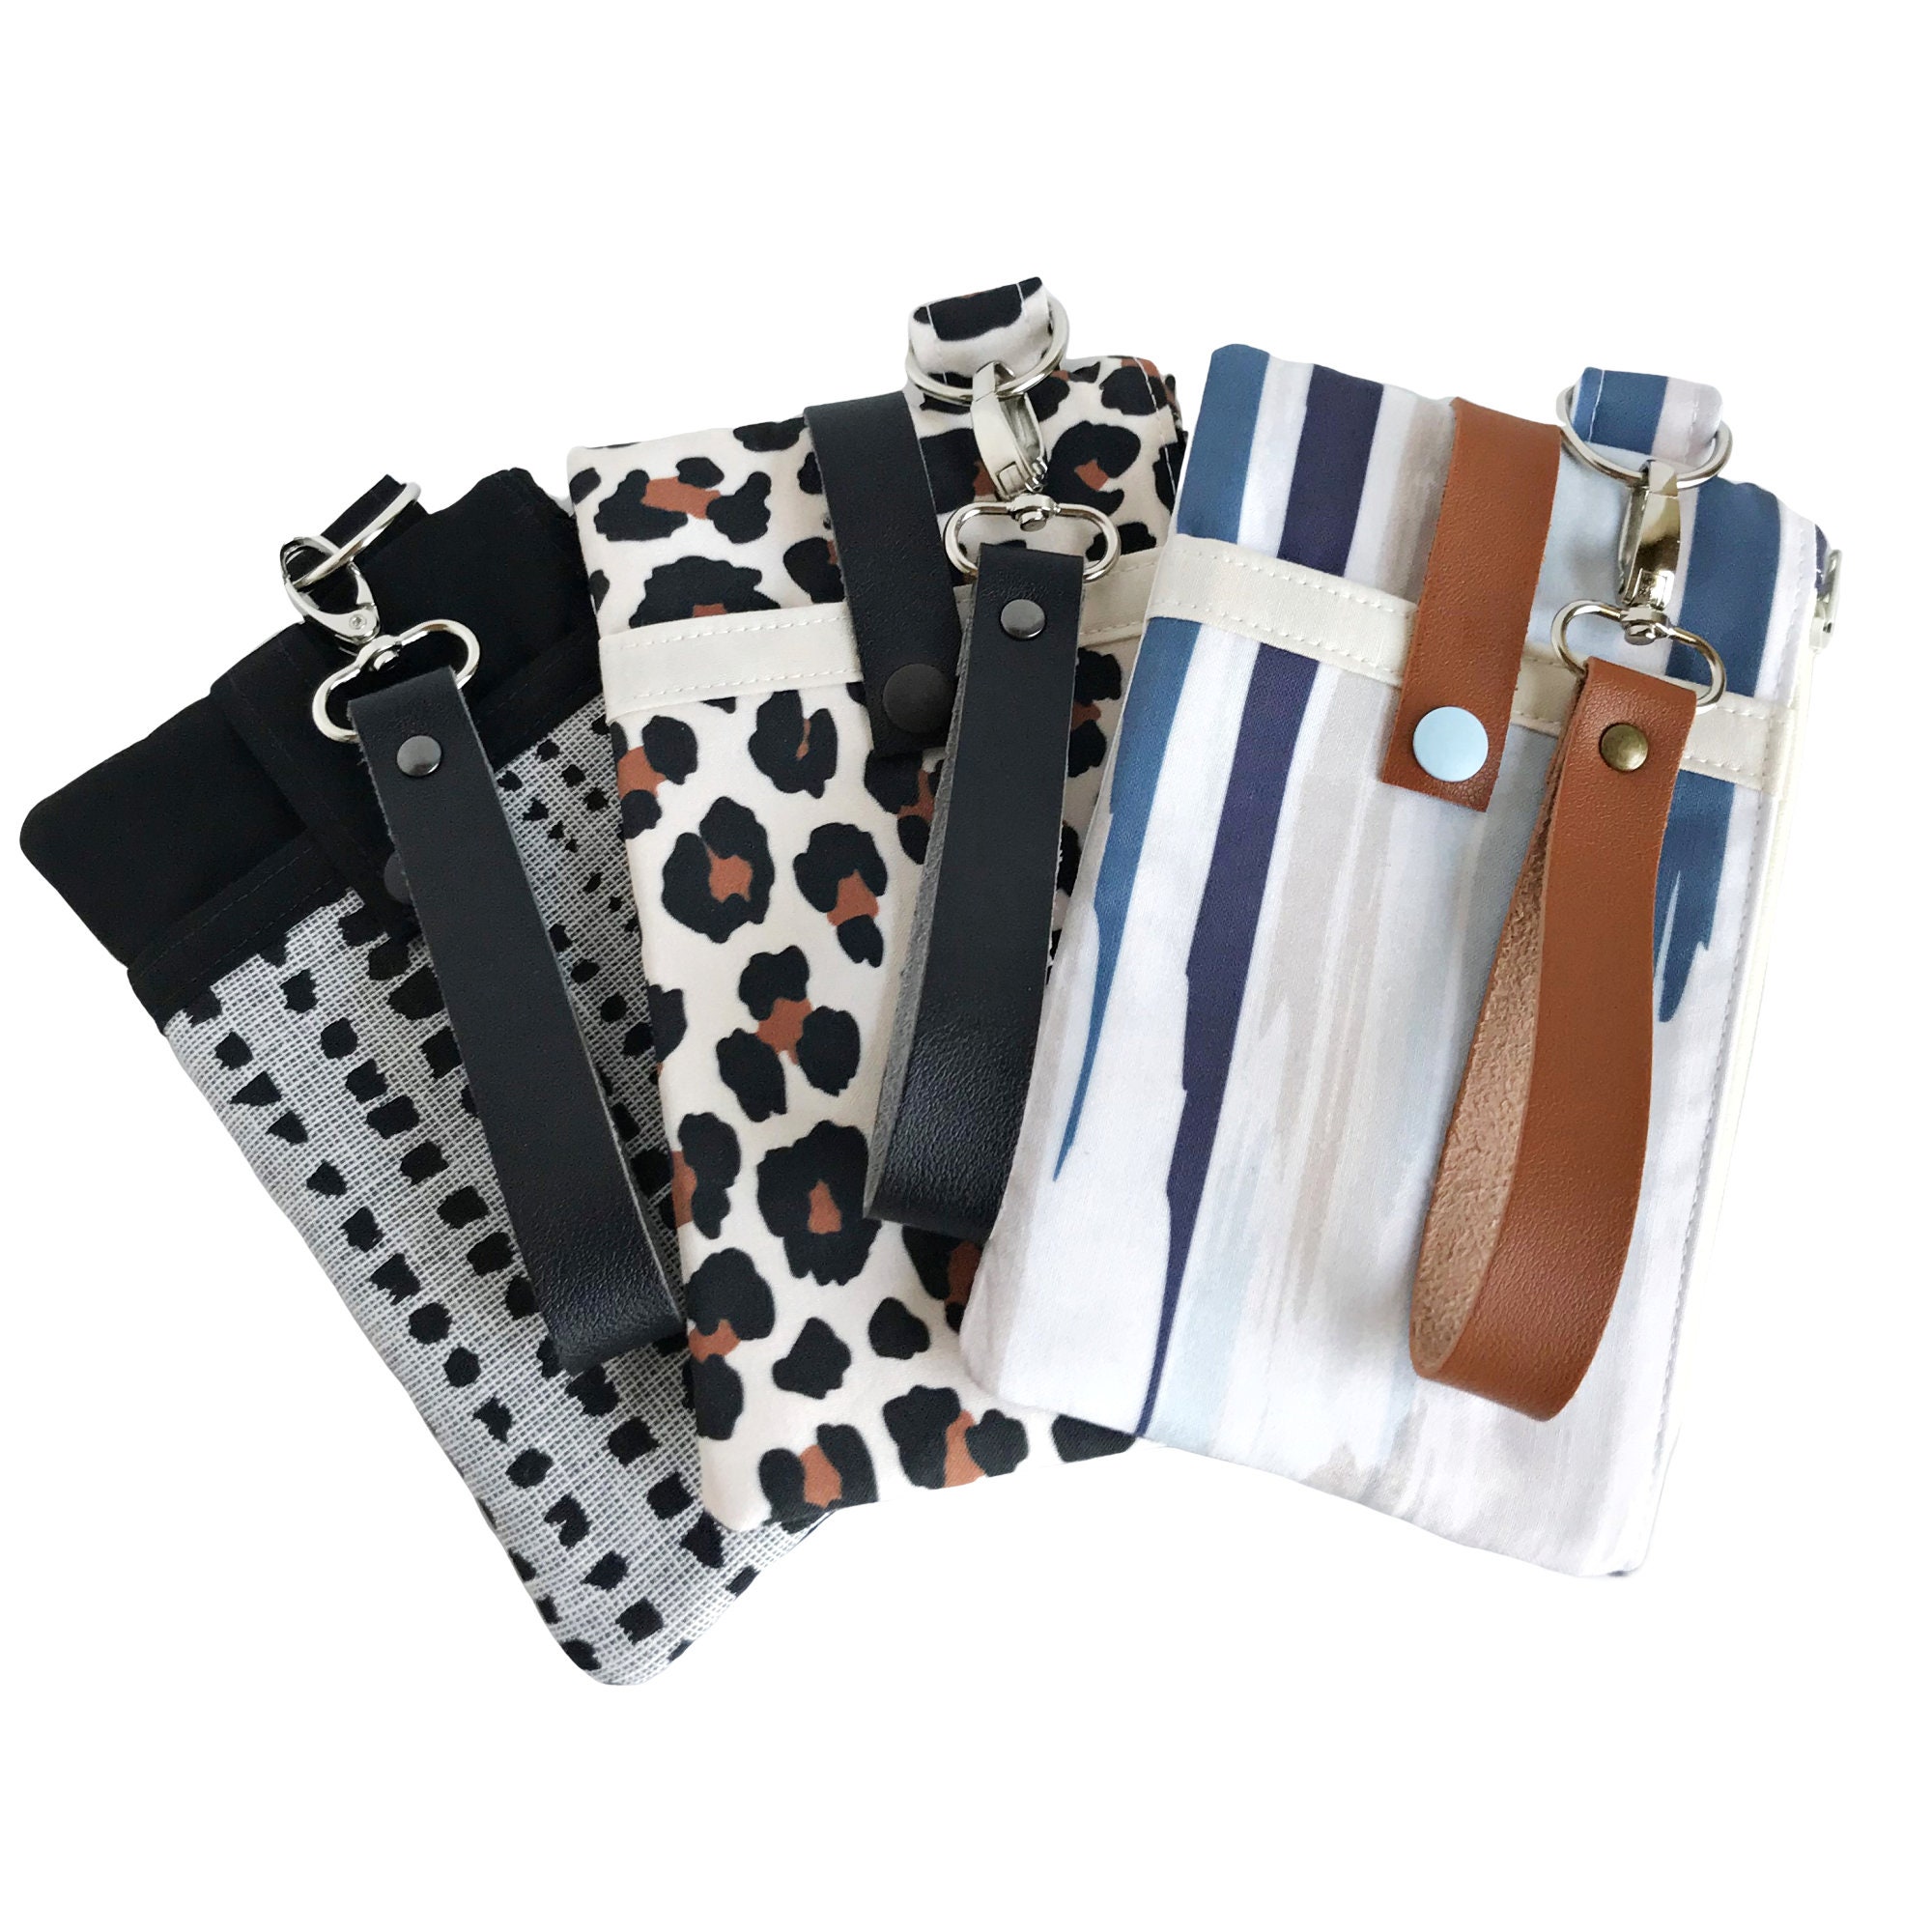 PDF Machine/Hand Sewing Pattern - Wide Strap Crossbody Bag — kzstevens